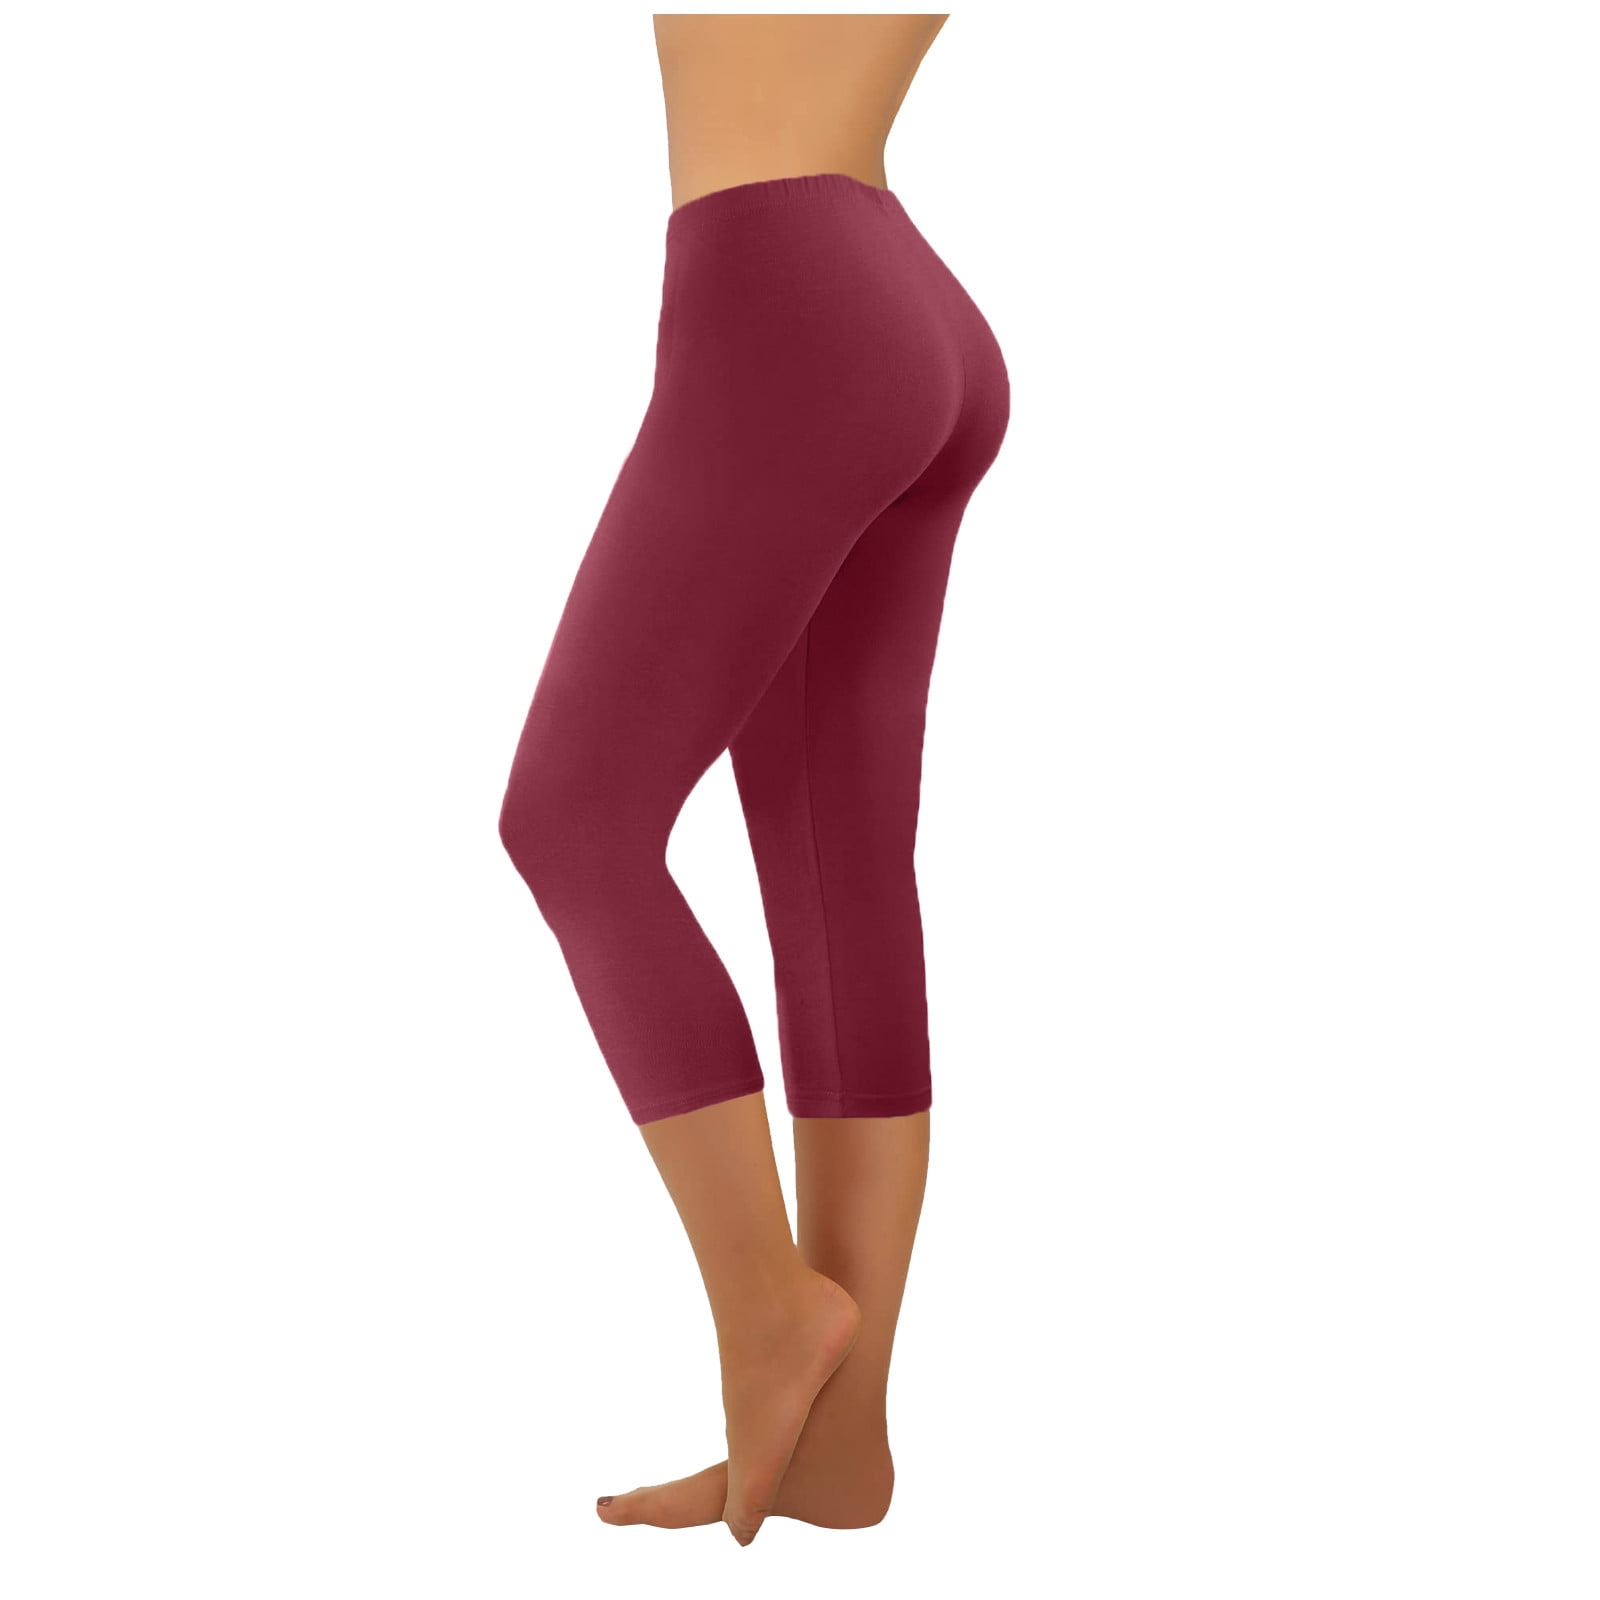 ZQGJB Workout Leggings for Women Casual Bootleg Sport Yoga Pants